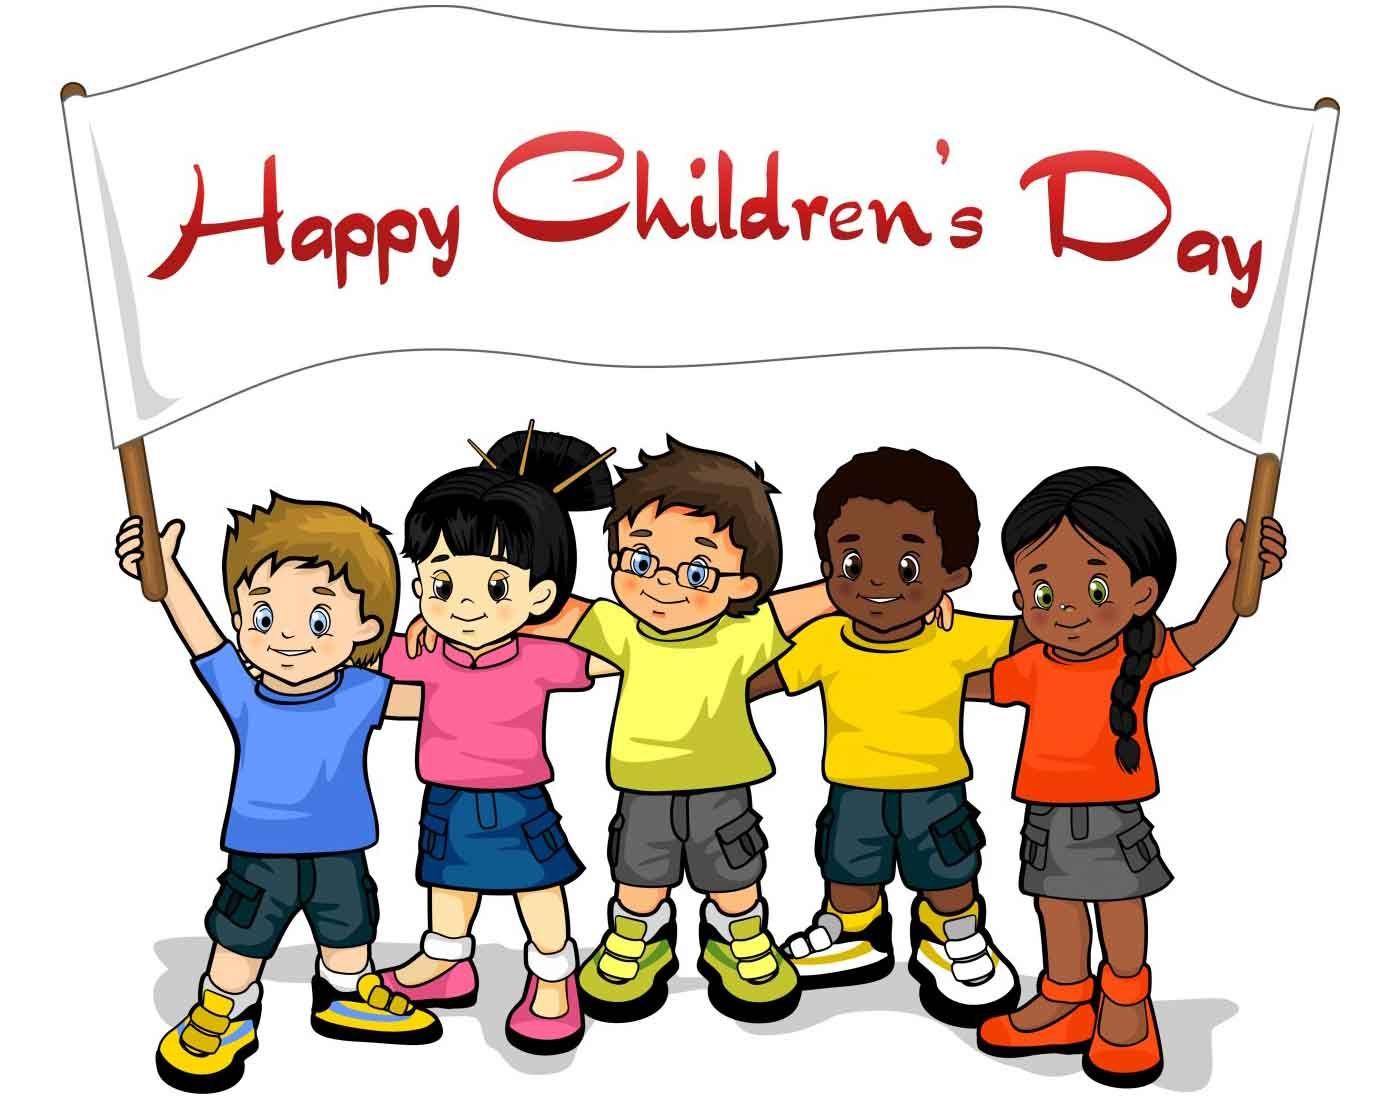 International Children's Day, celebrated JUNE 1